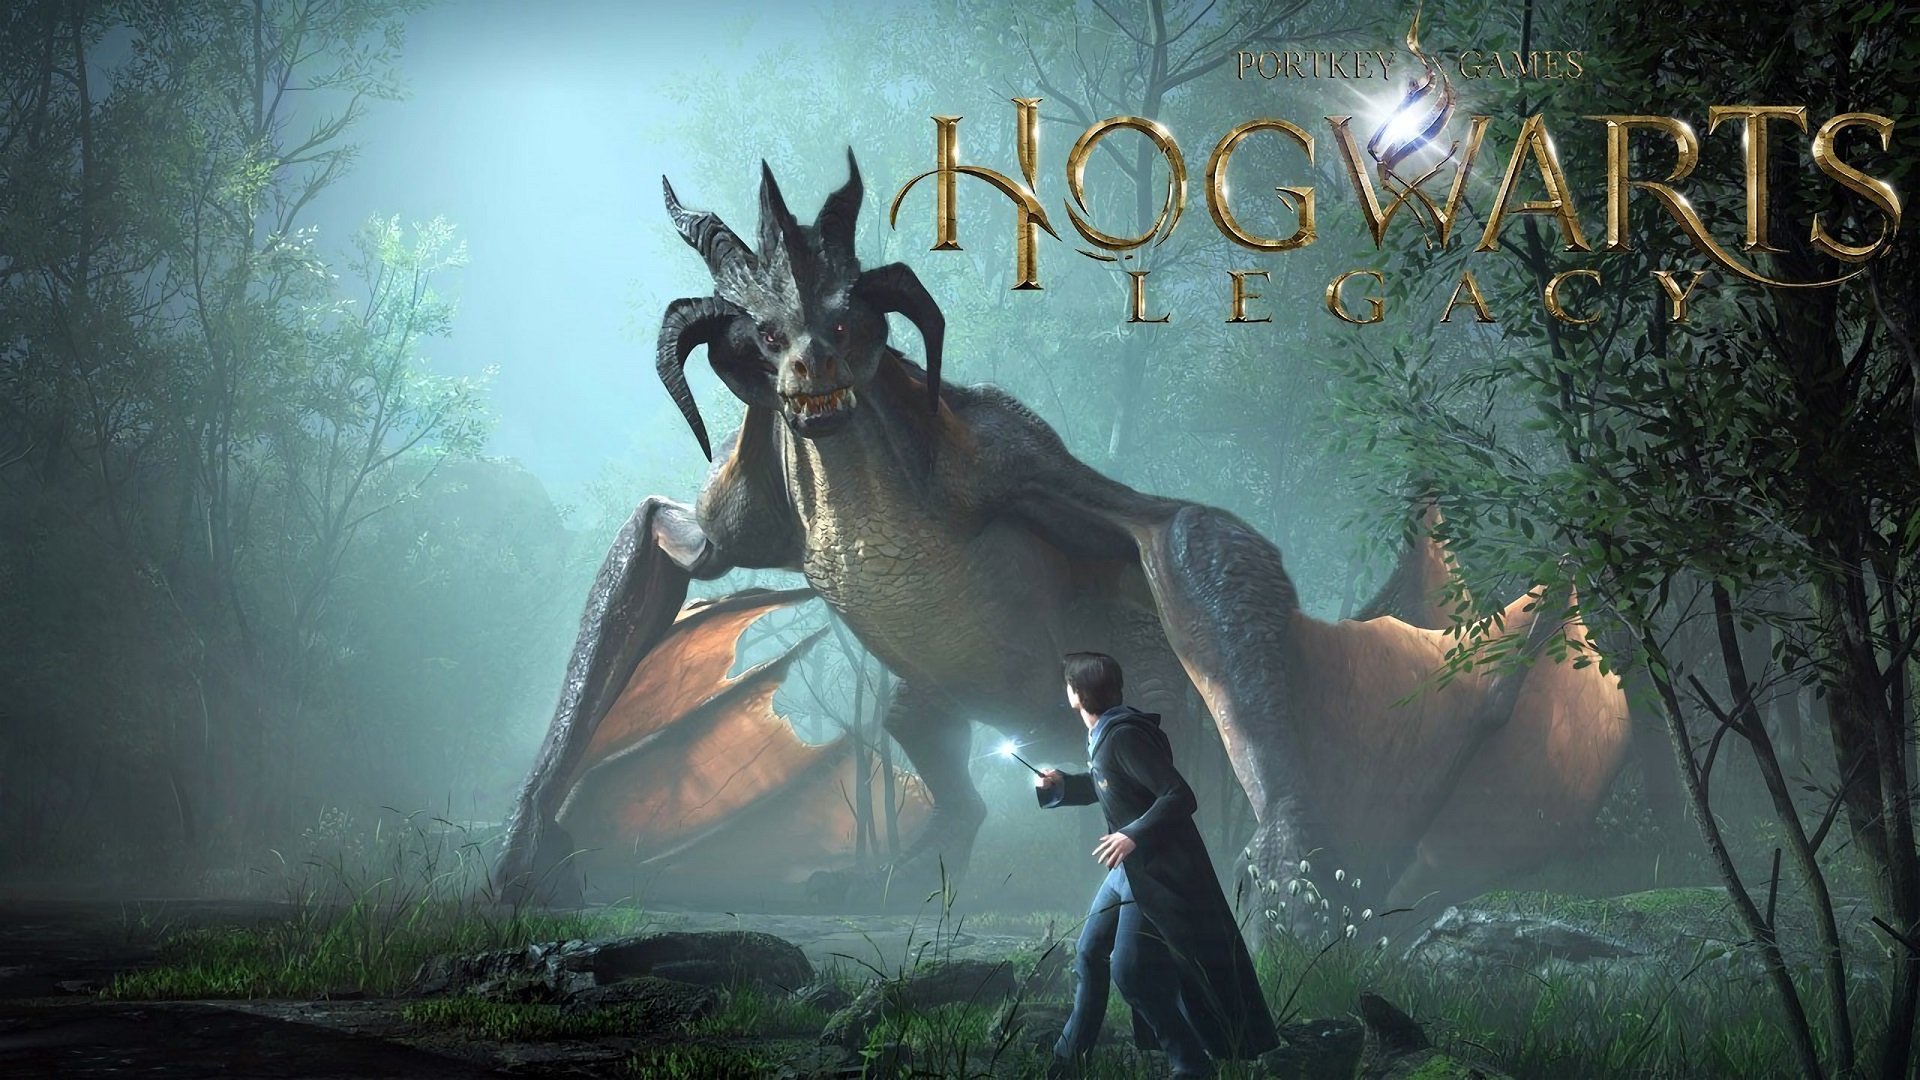 hogwarts legacy game release